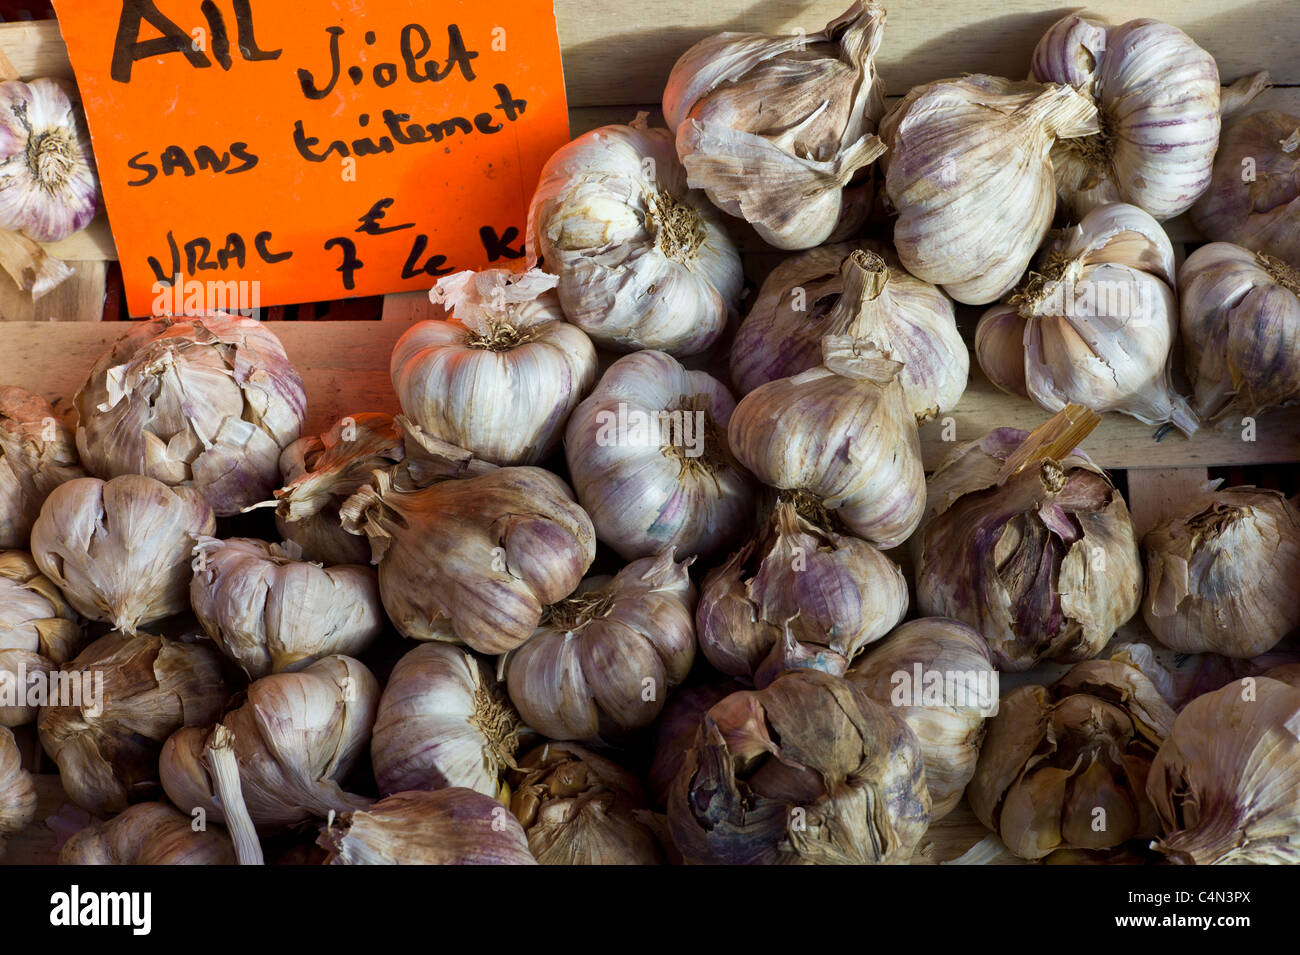 Fresh garlic violet ail, Allium sativum, at food market in Bordeaux region of France Stock Photo